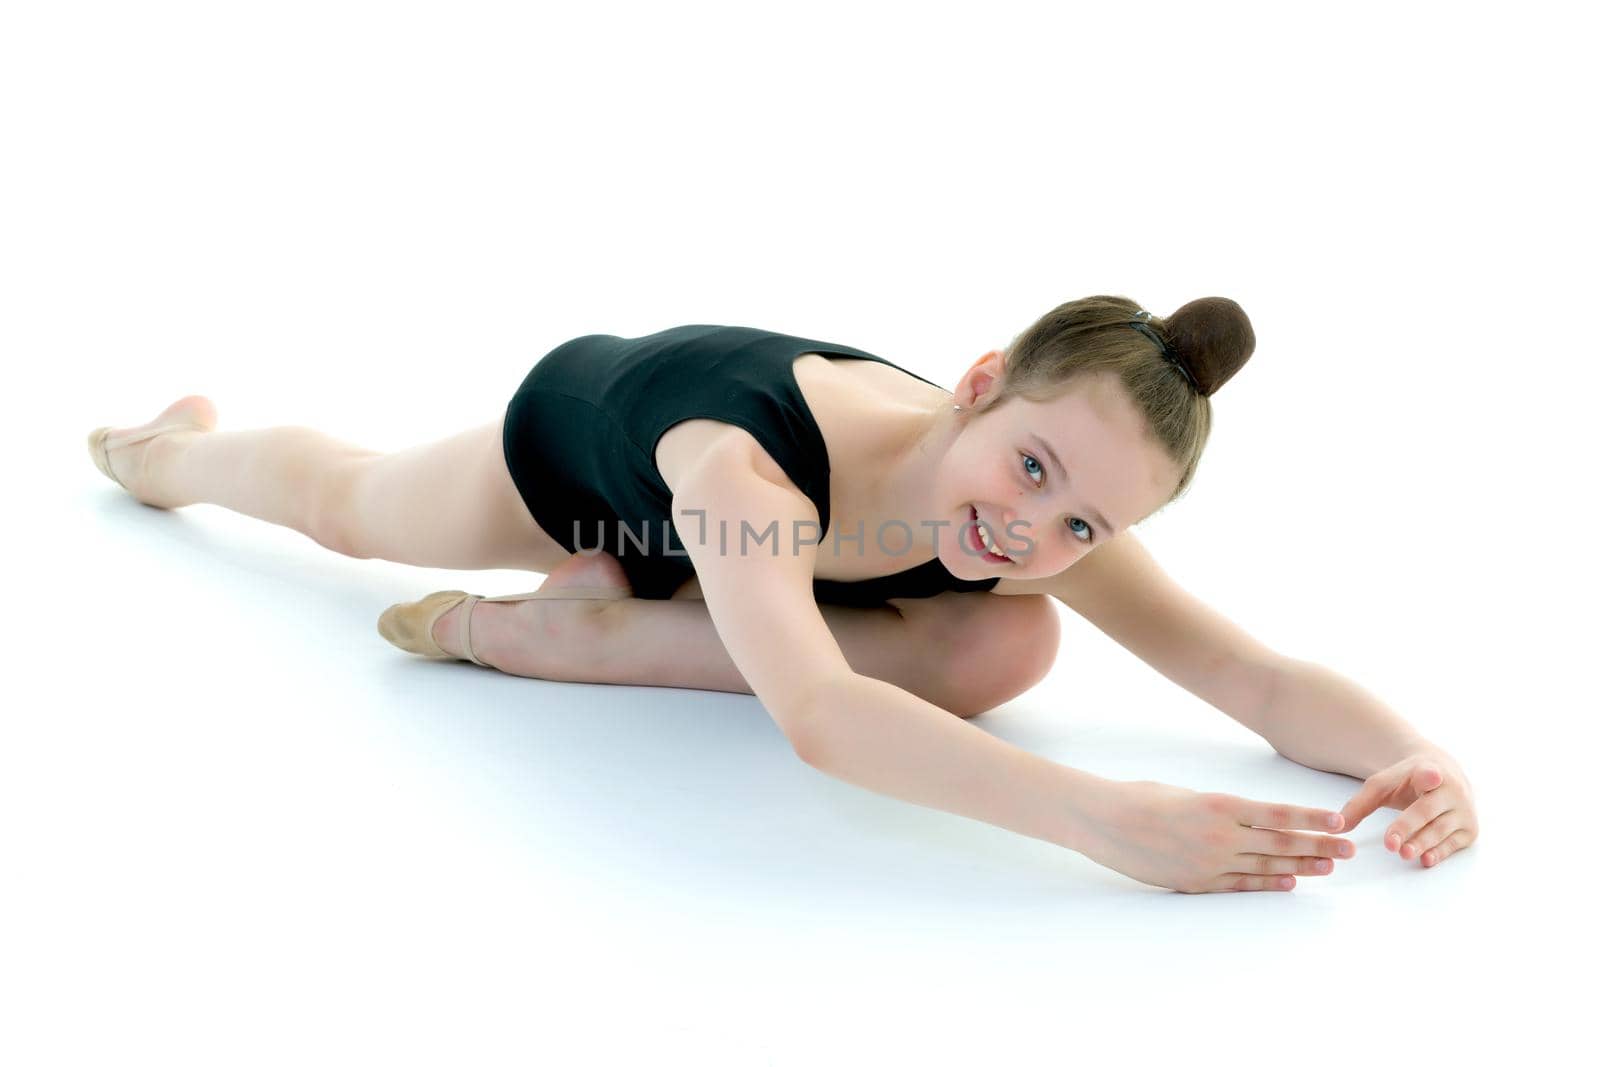 The gymnast perform an acrobatic element on the floor. by kolesnikov_studio